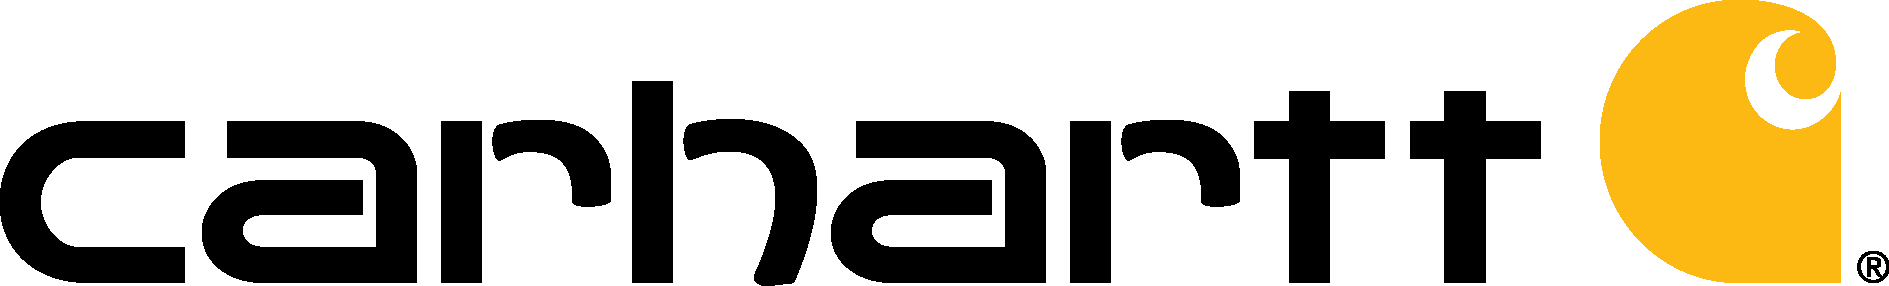 Carhartt Logo png